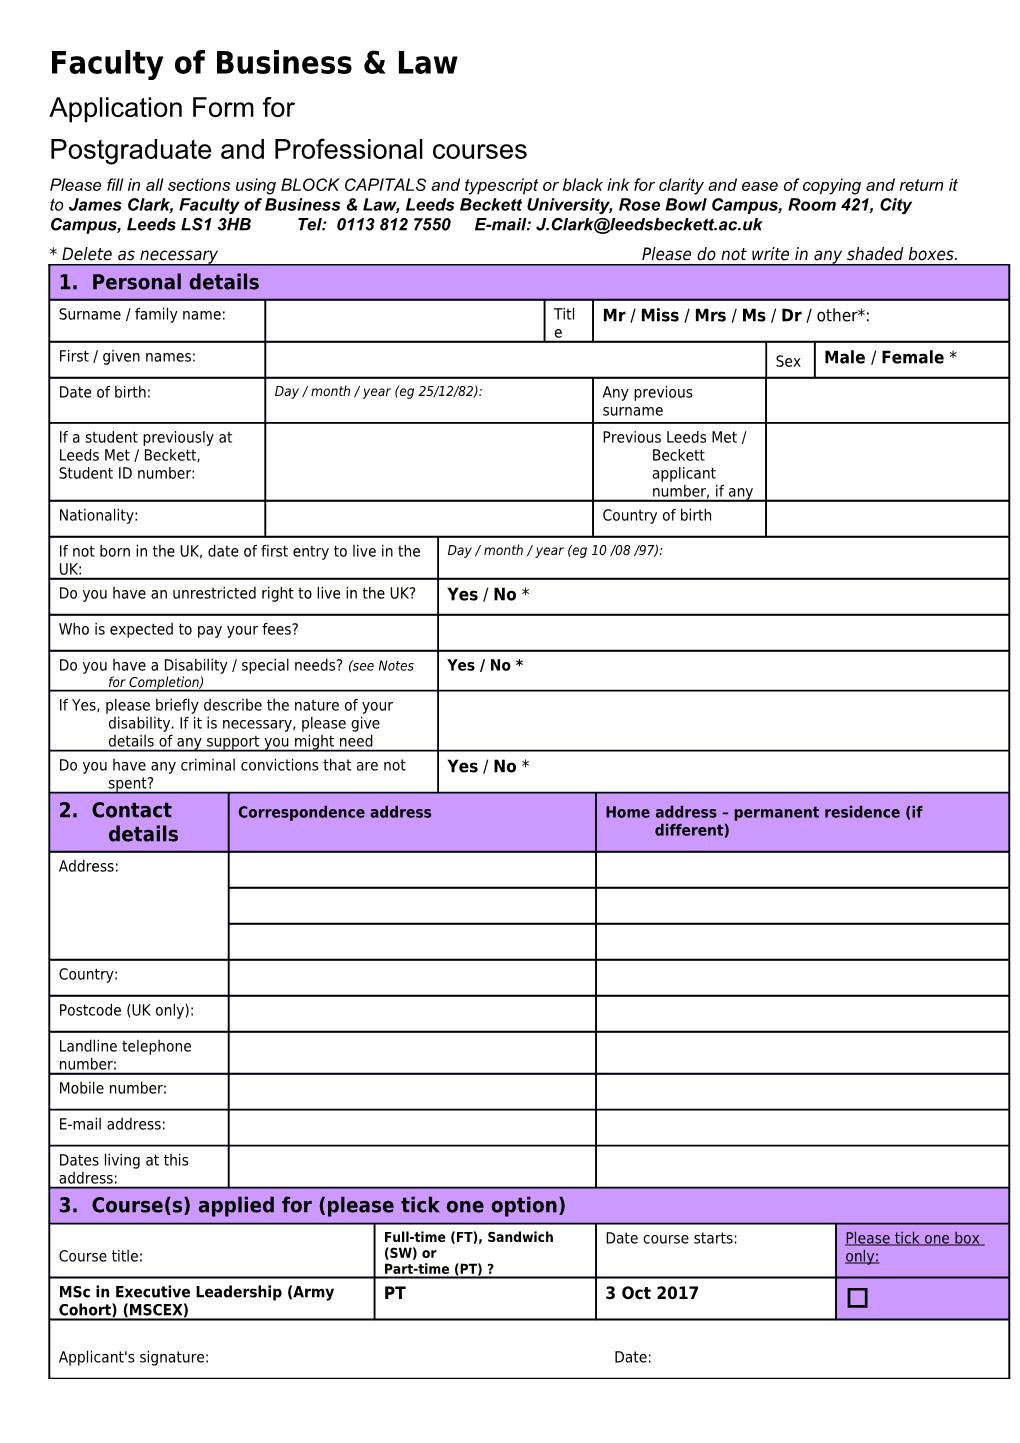 LMU Application Form Draft 2